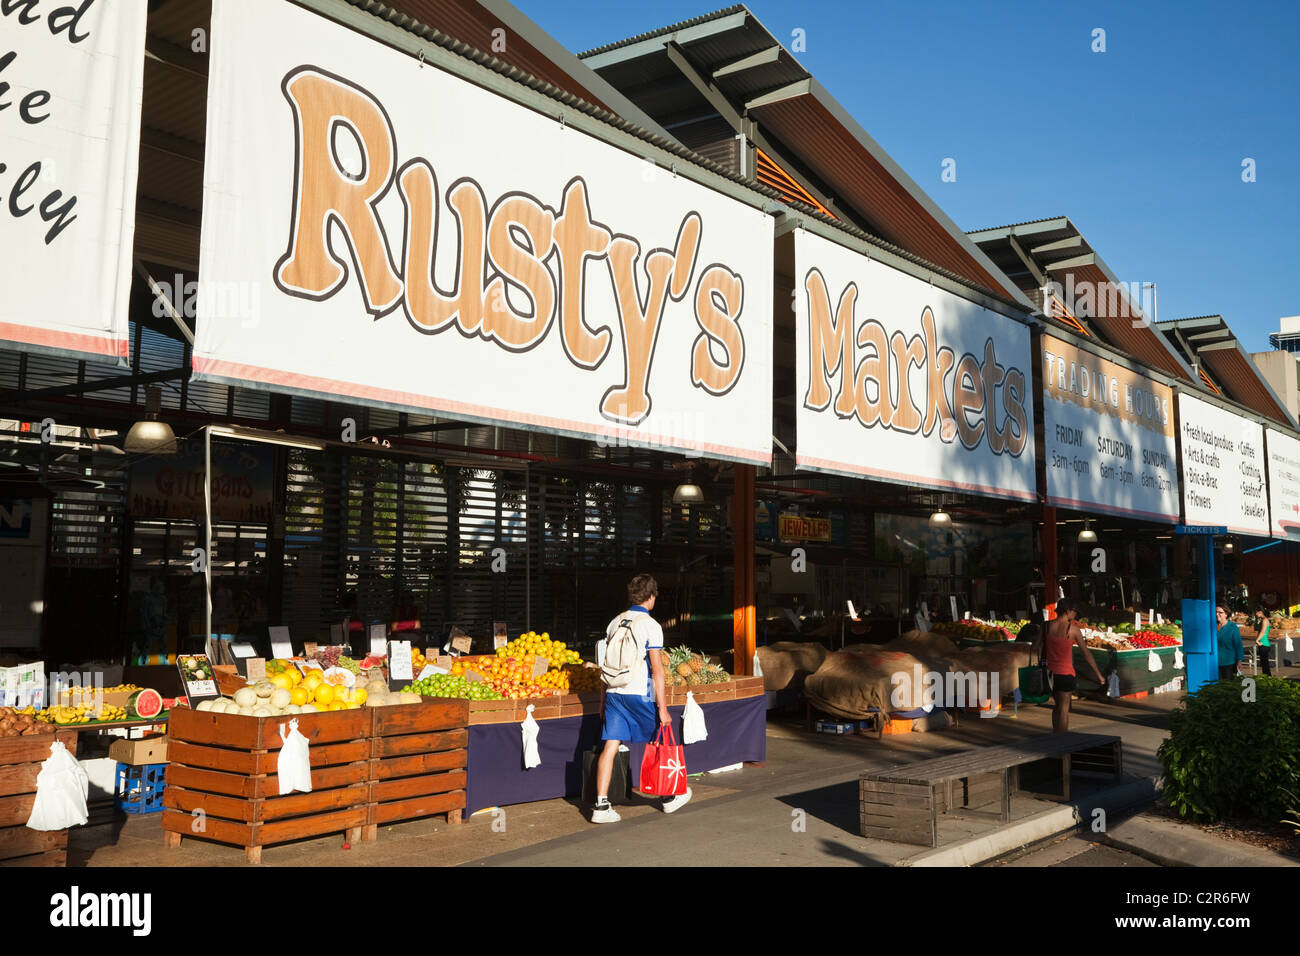 Rustys Märkte - lokale Obst- und Gemüsemarkt in der Innenstadt. Cairns, Queensland, Australien Stockfoto